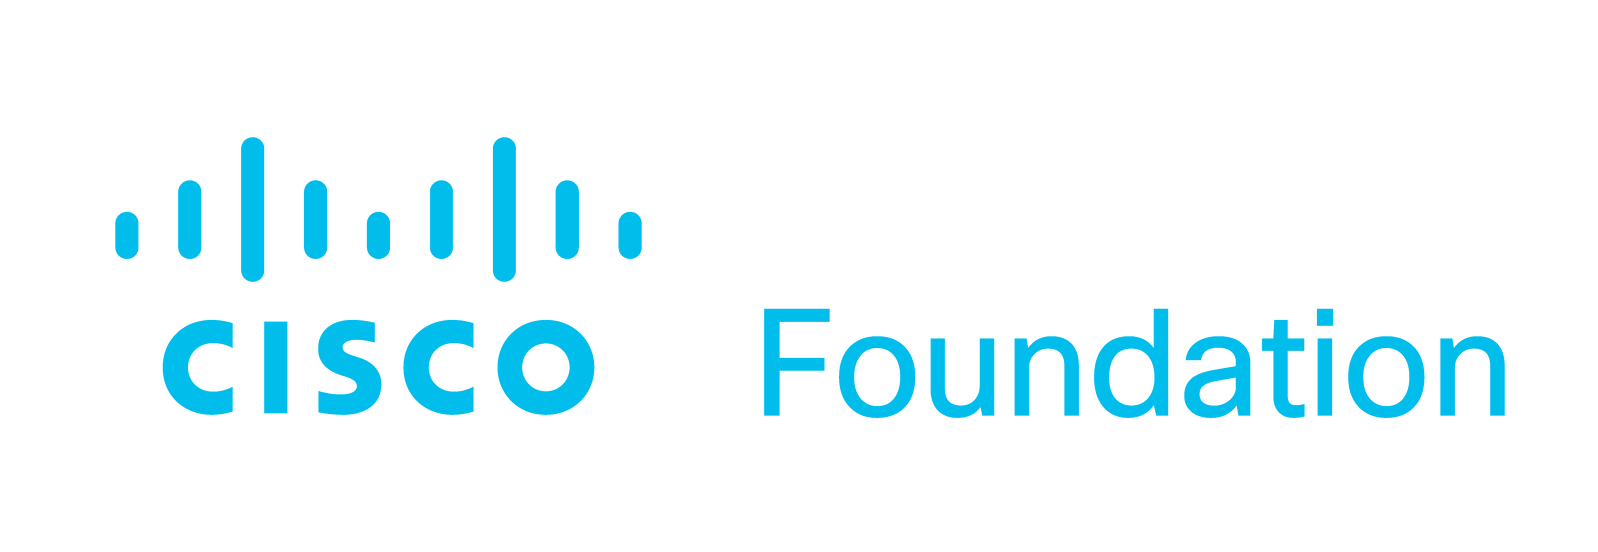 Cisco-Foundation.png